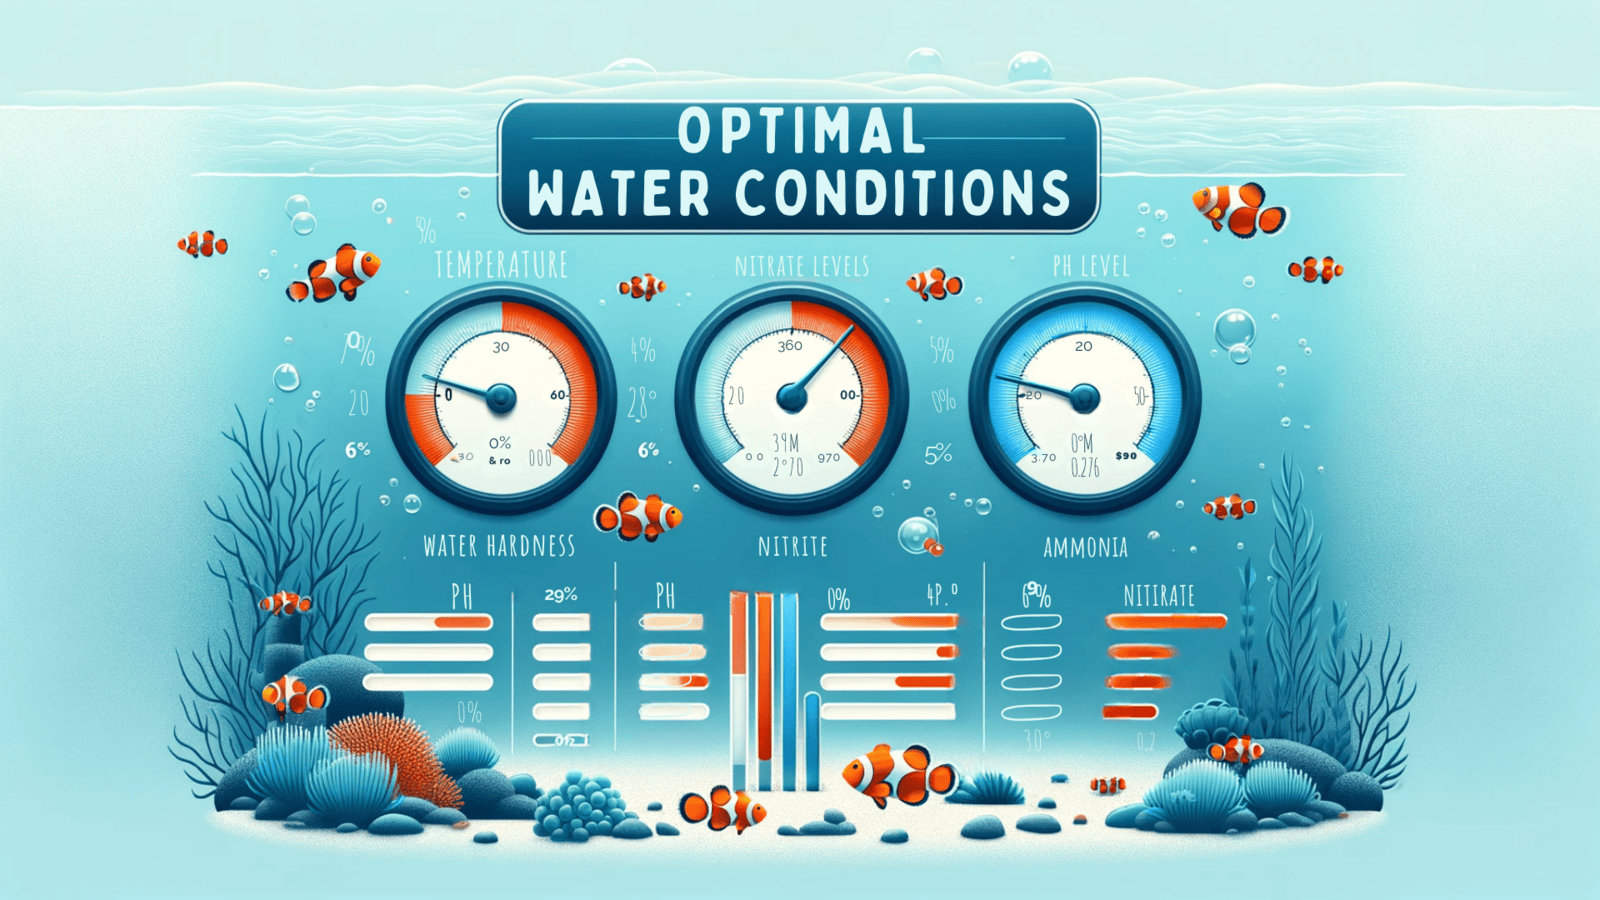 Ensure Optimal Water Conditions